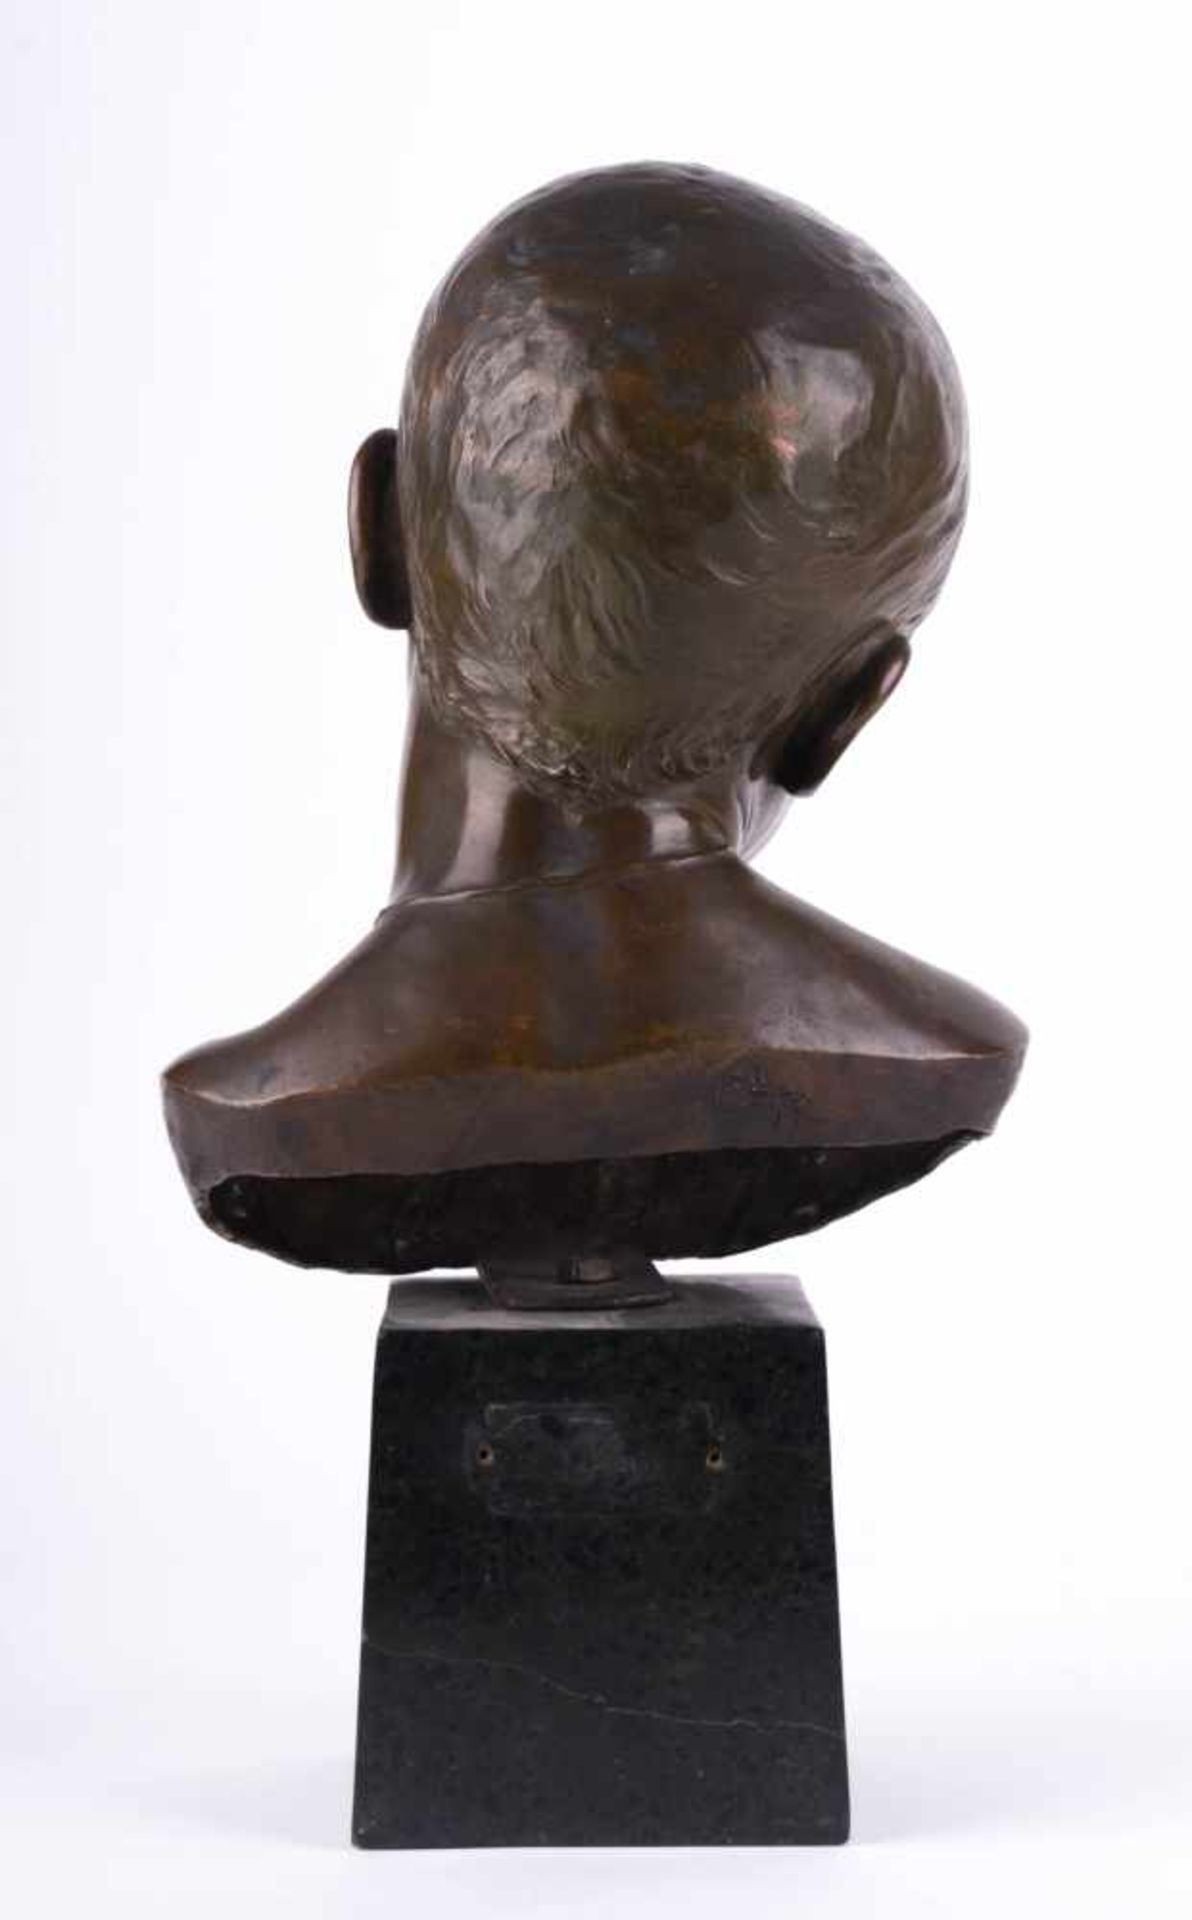 Monogrammist E.R. "Knabenkopf" Skulptur-Volumen, Bronze, Gesamthöhe 44 cm, rückseitig - Bild 6 aus 10